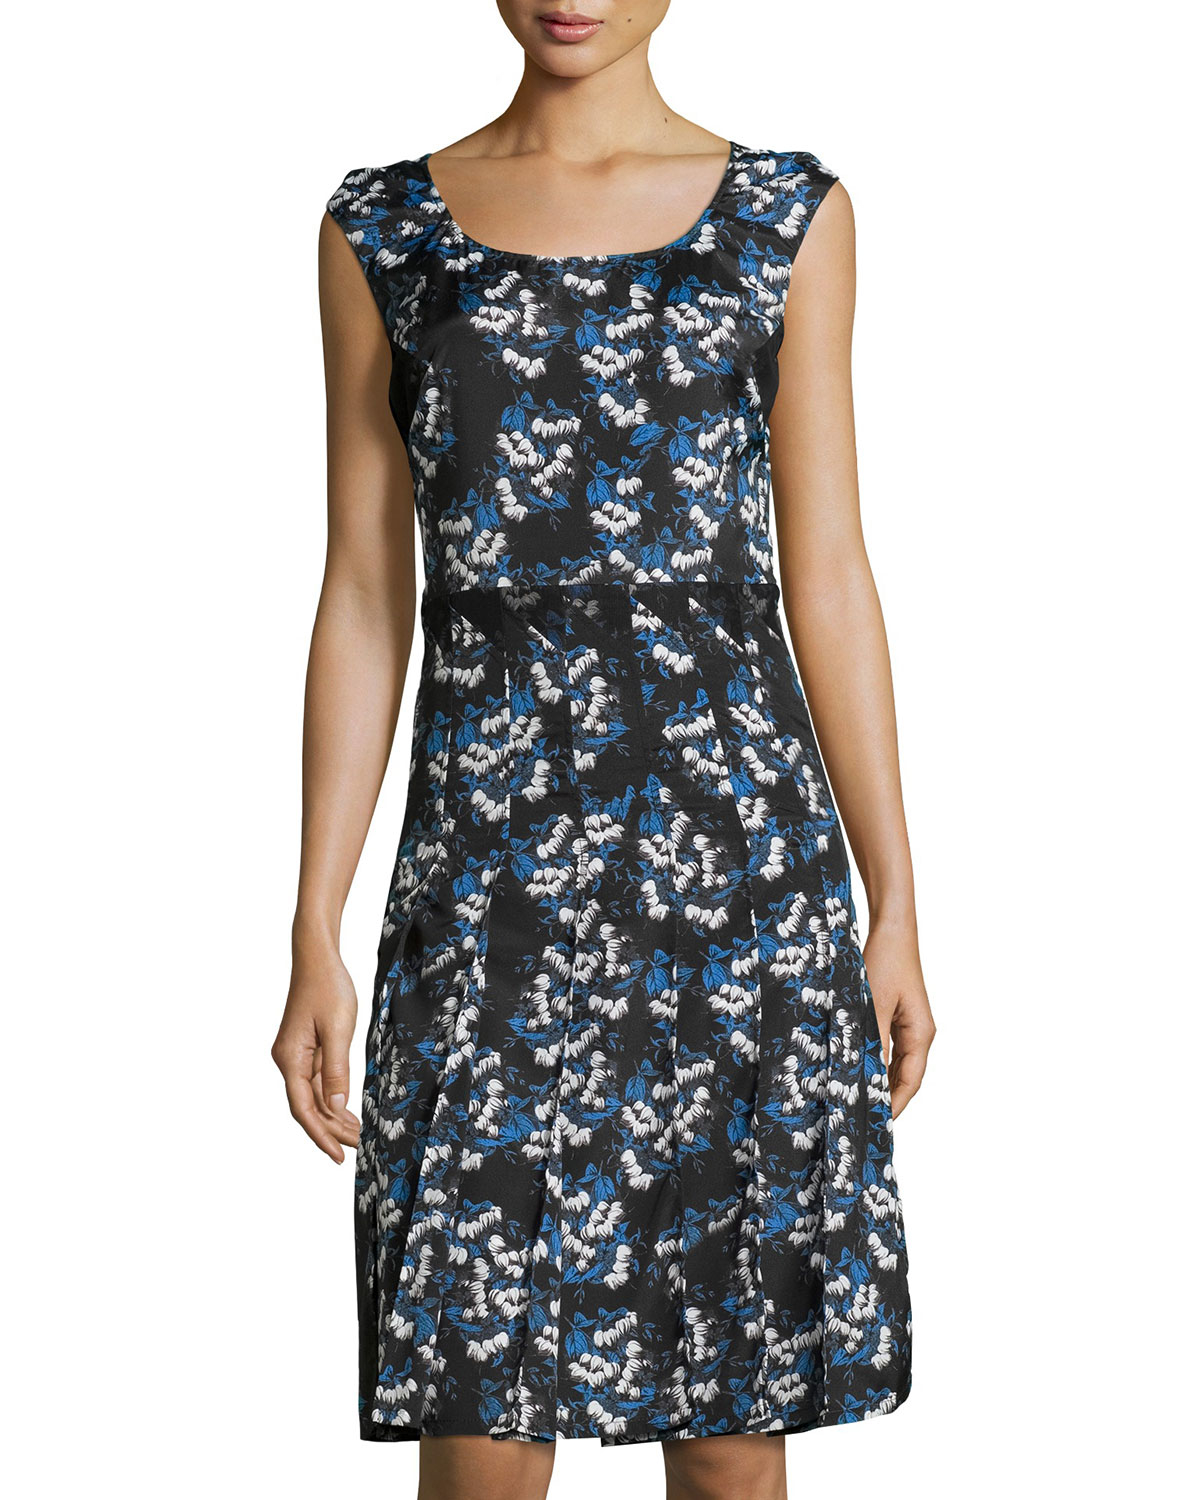 Lyst - Zac zac posen Sleeveless Floral Maxi Dress in Blue